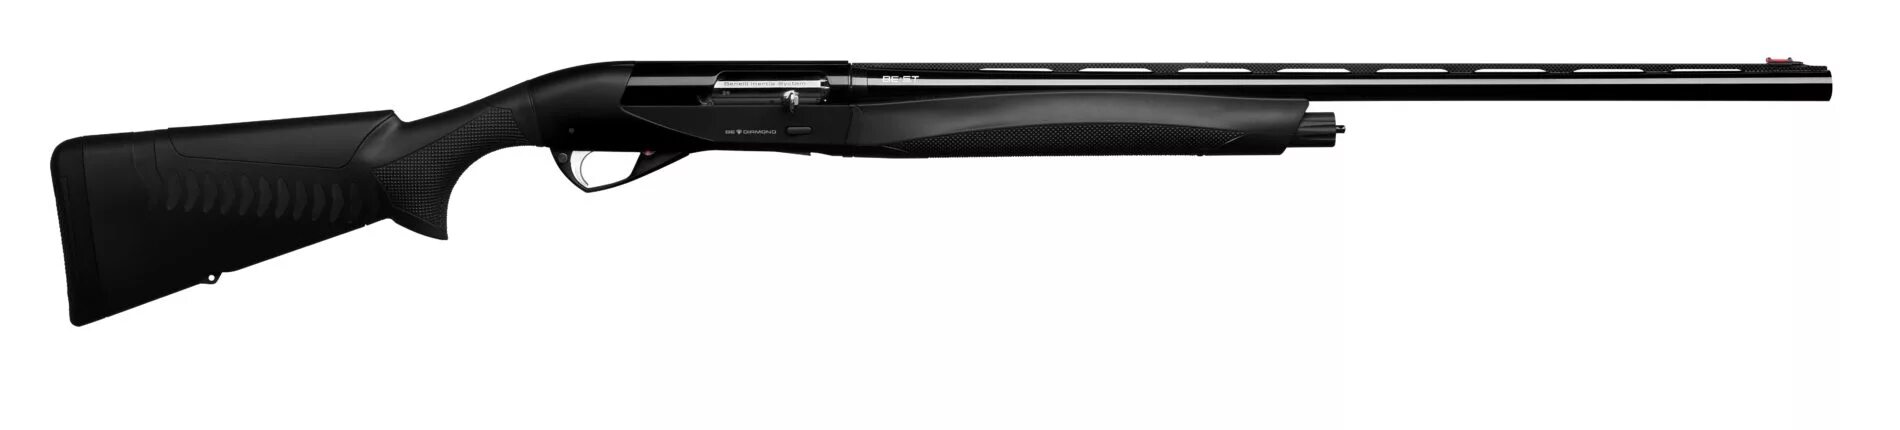 Самозарядное охотничье ружье. Benelli m2 Tactical 12/76, 55. Ружье Benelli m2. Ружье Франчи Аффинити.